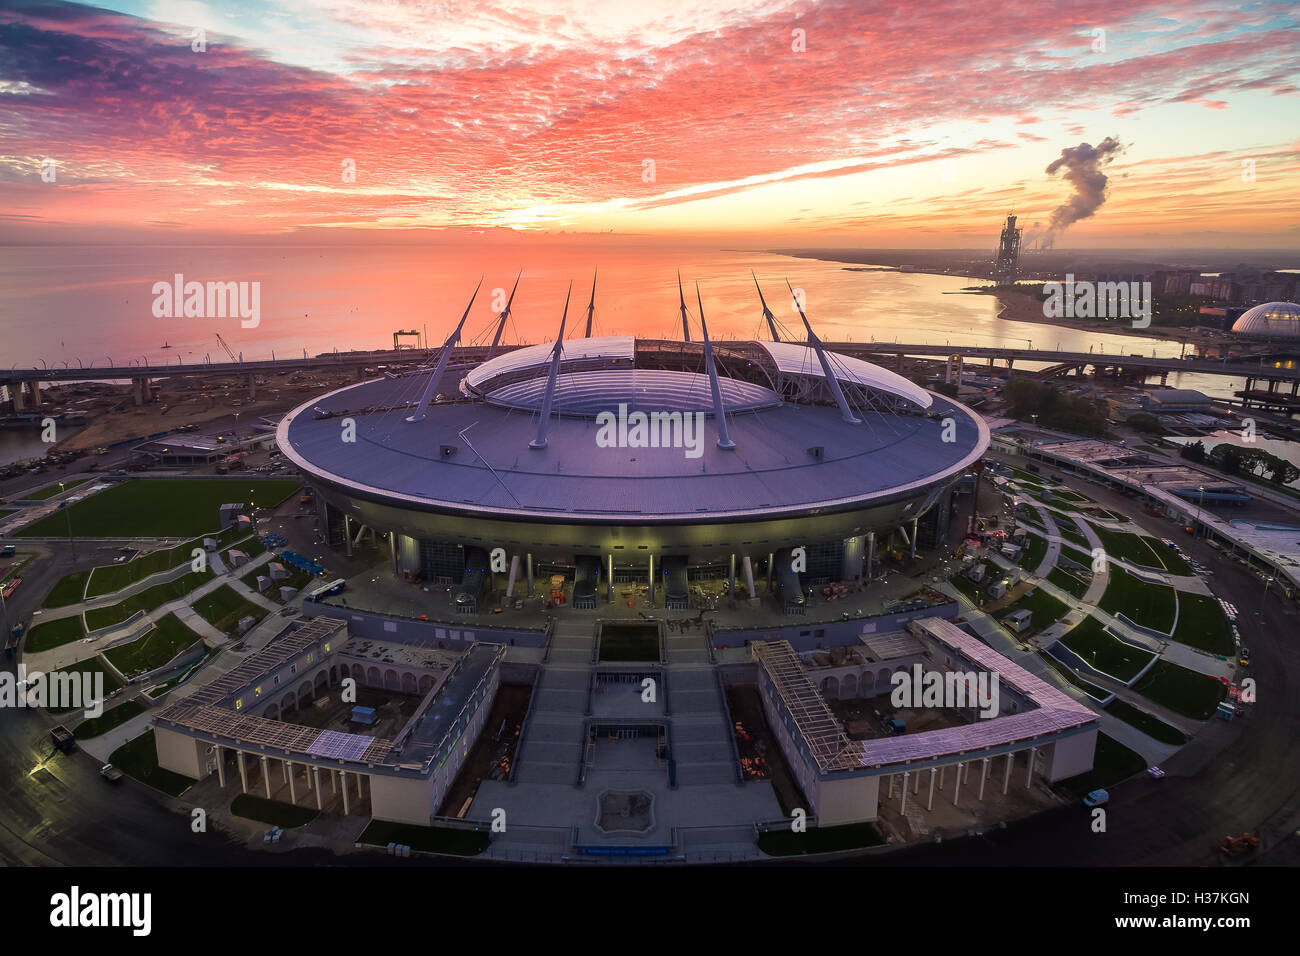 The Construction Of The Zenit Gazprom Arena Stadium Sunset Stock Photo Alamy